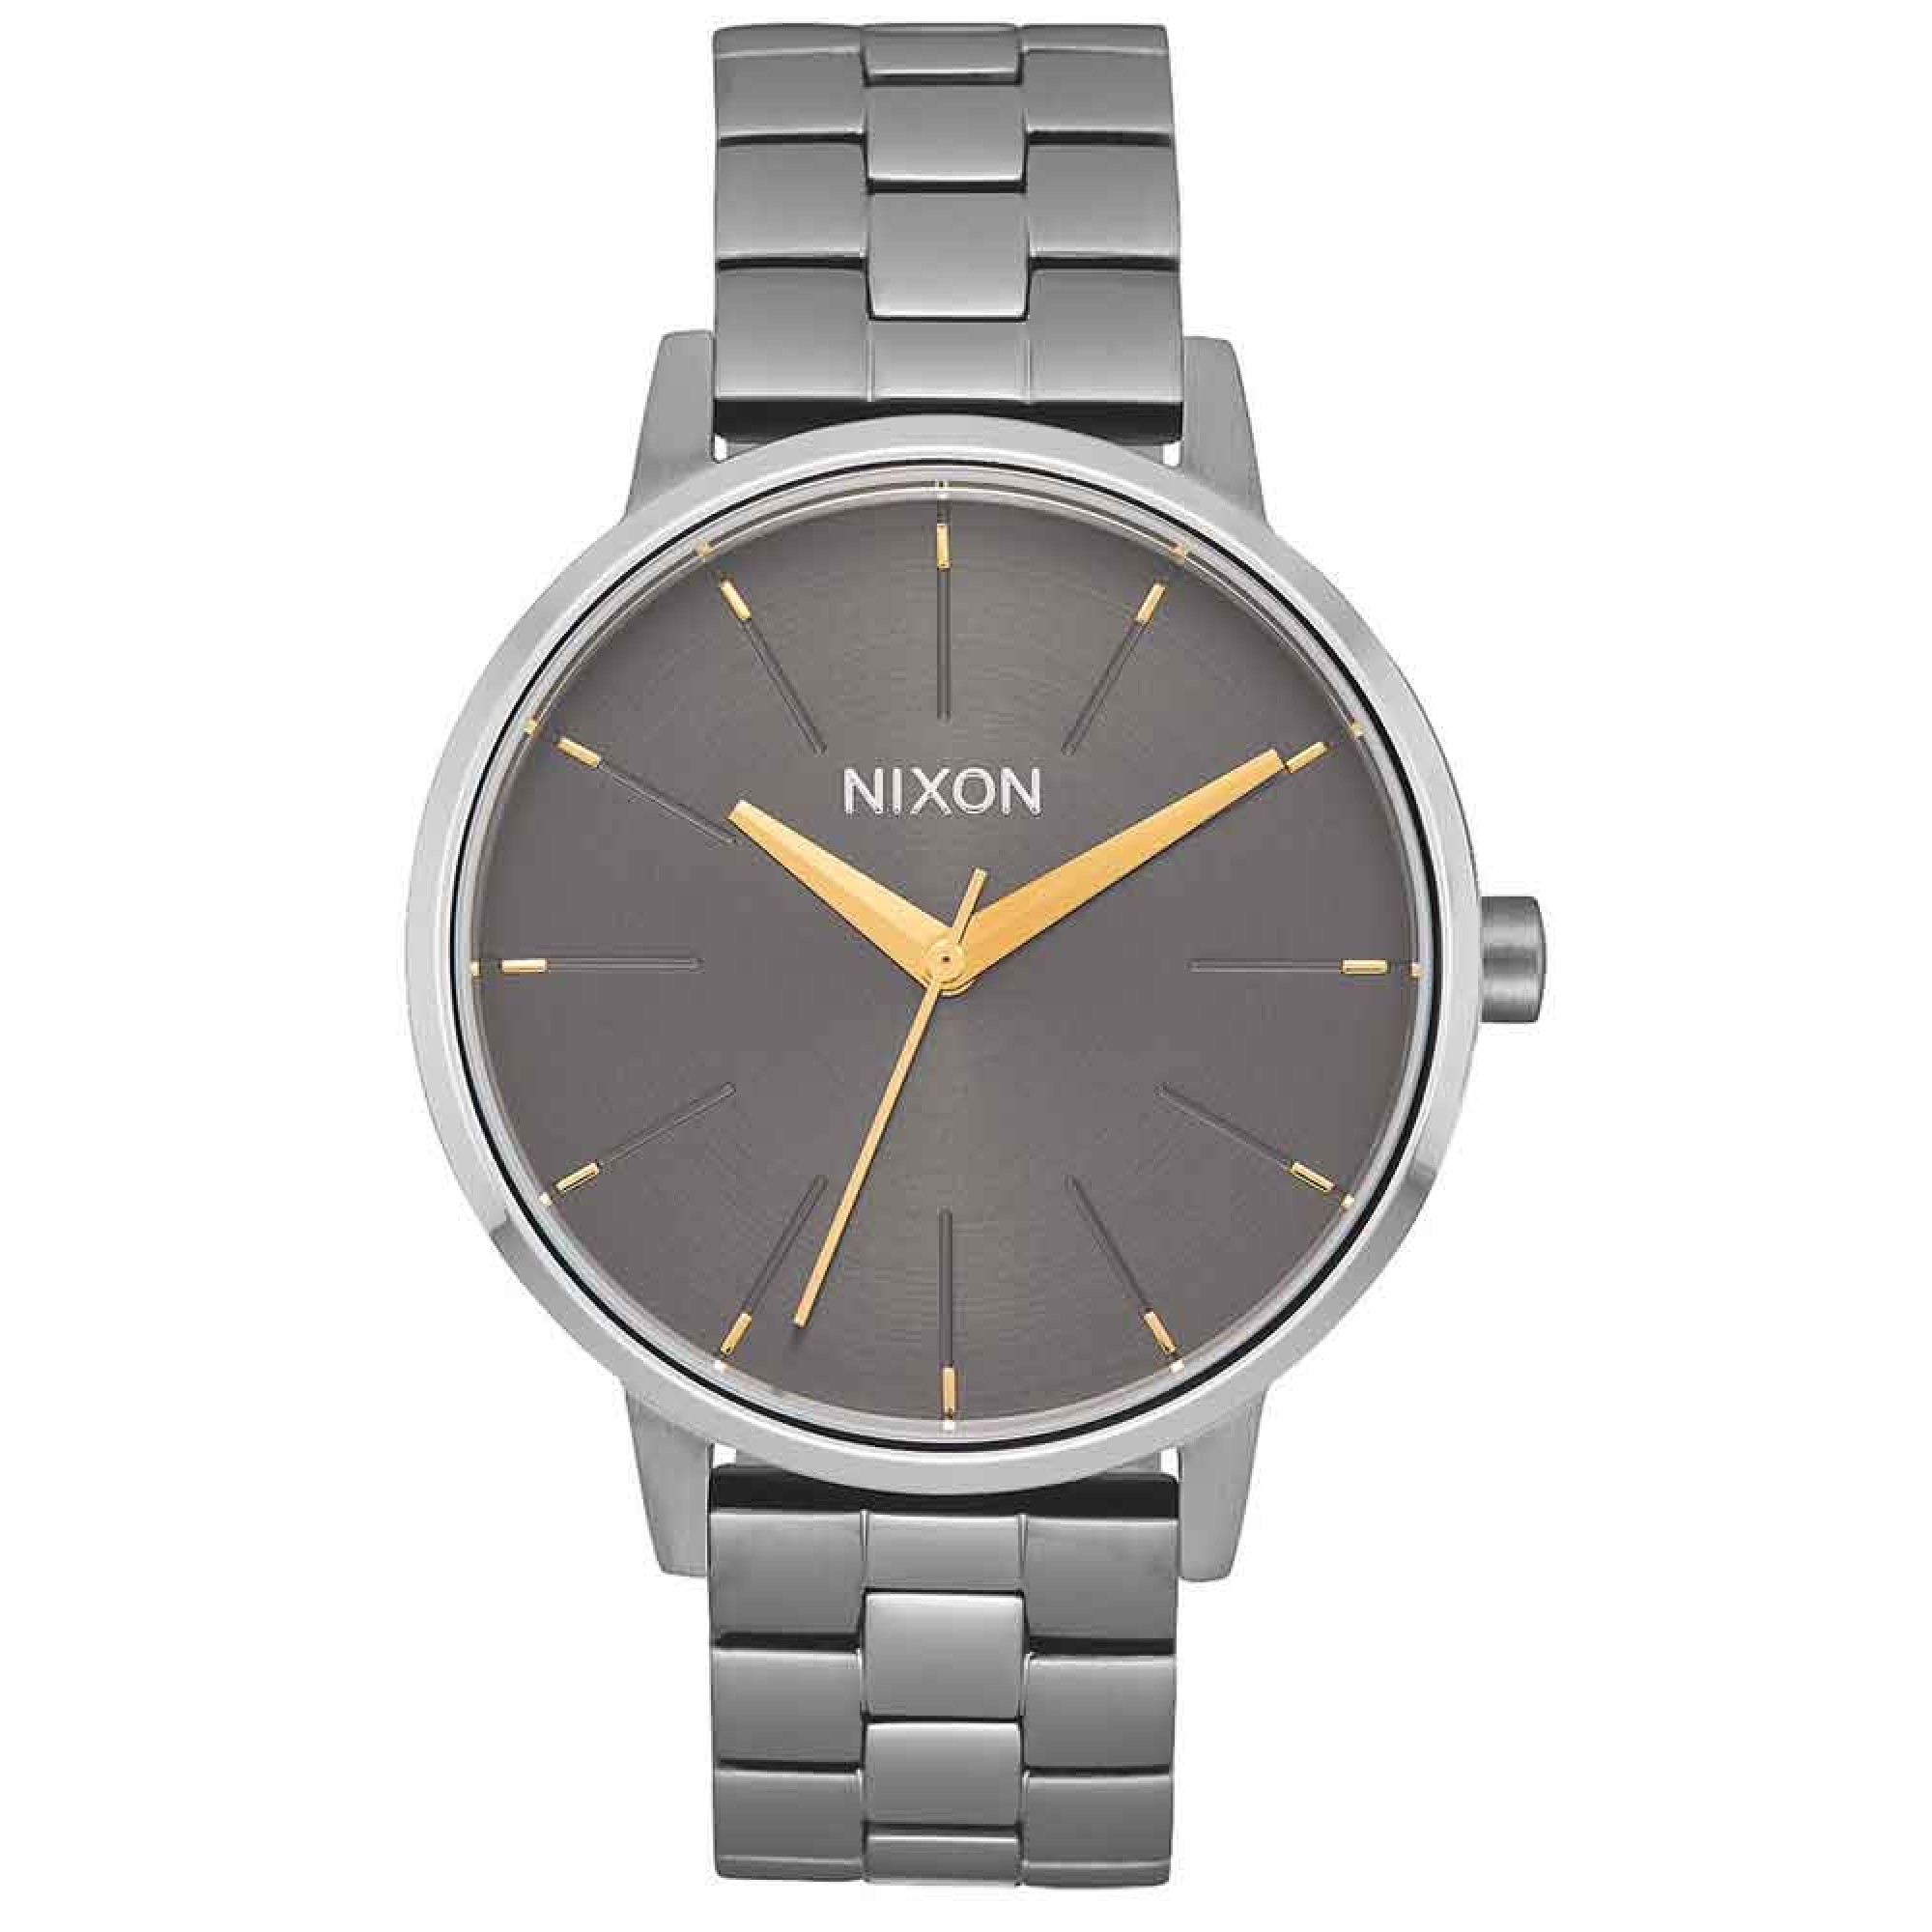 A099100 NIXON Ladies The Kensington Grey Watch | NIXON WATCHES NZ ...